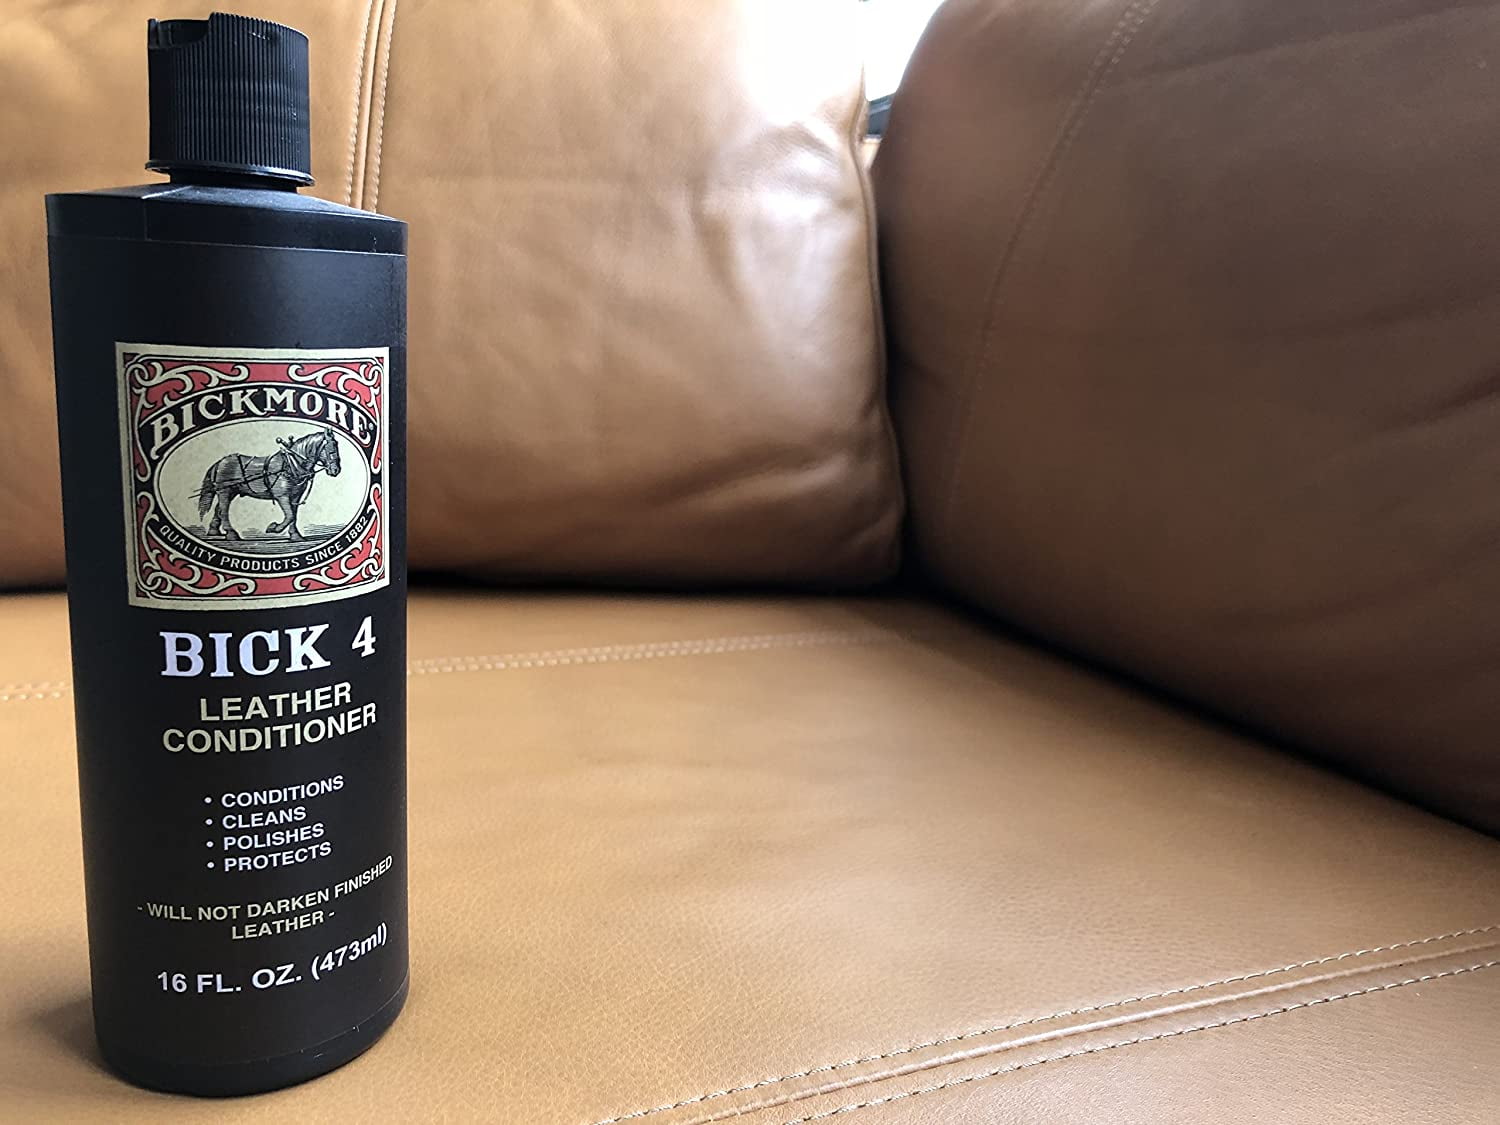 Bick 4 Leather Conditioner (16oz) – Bickmore